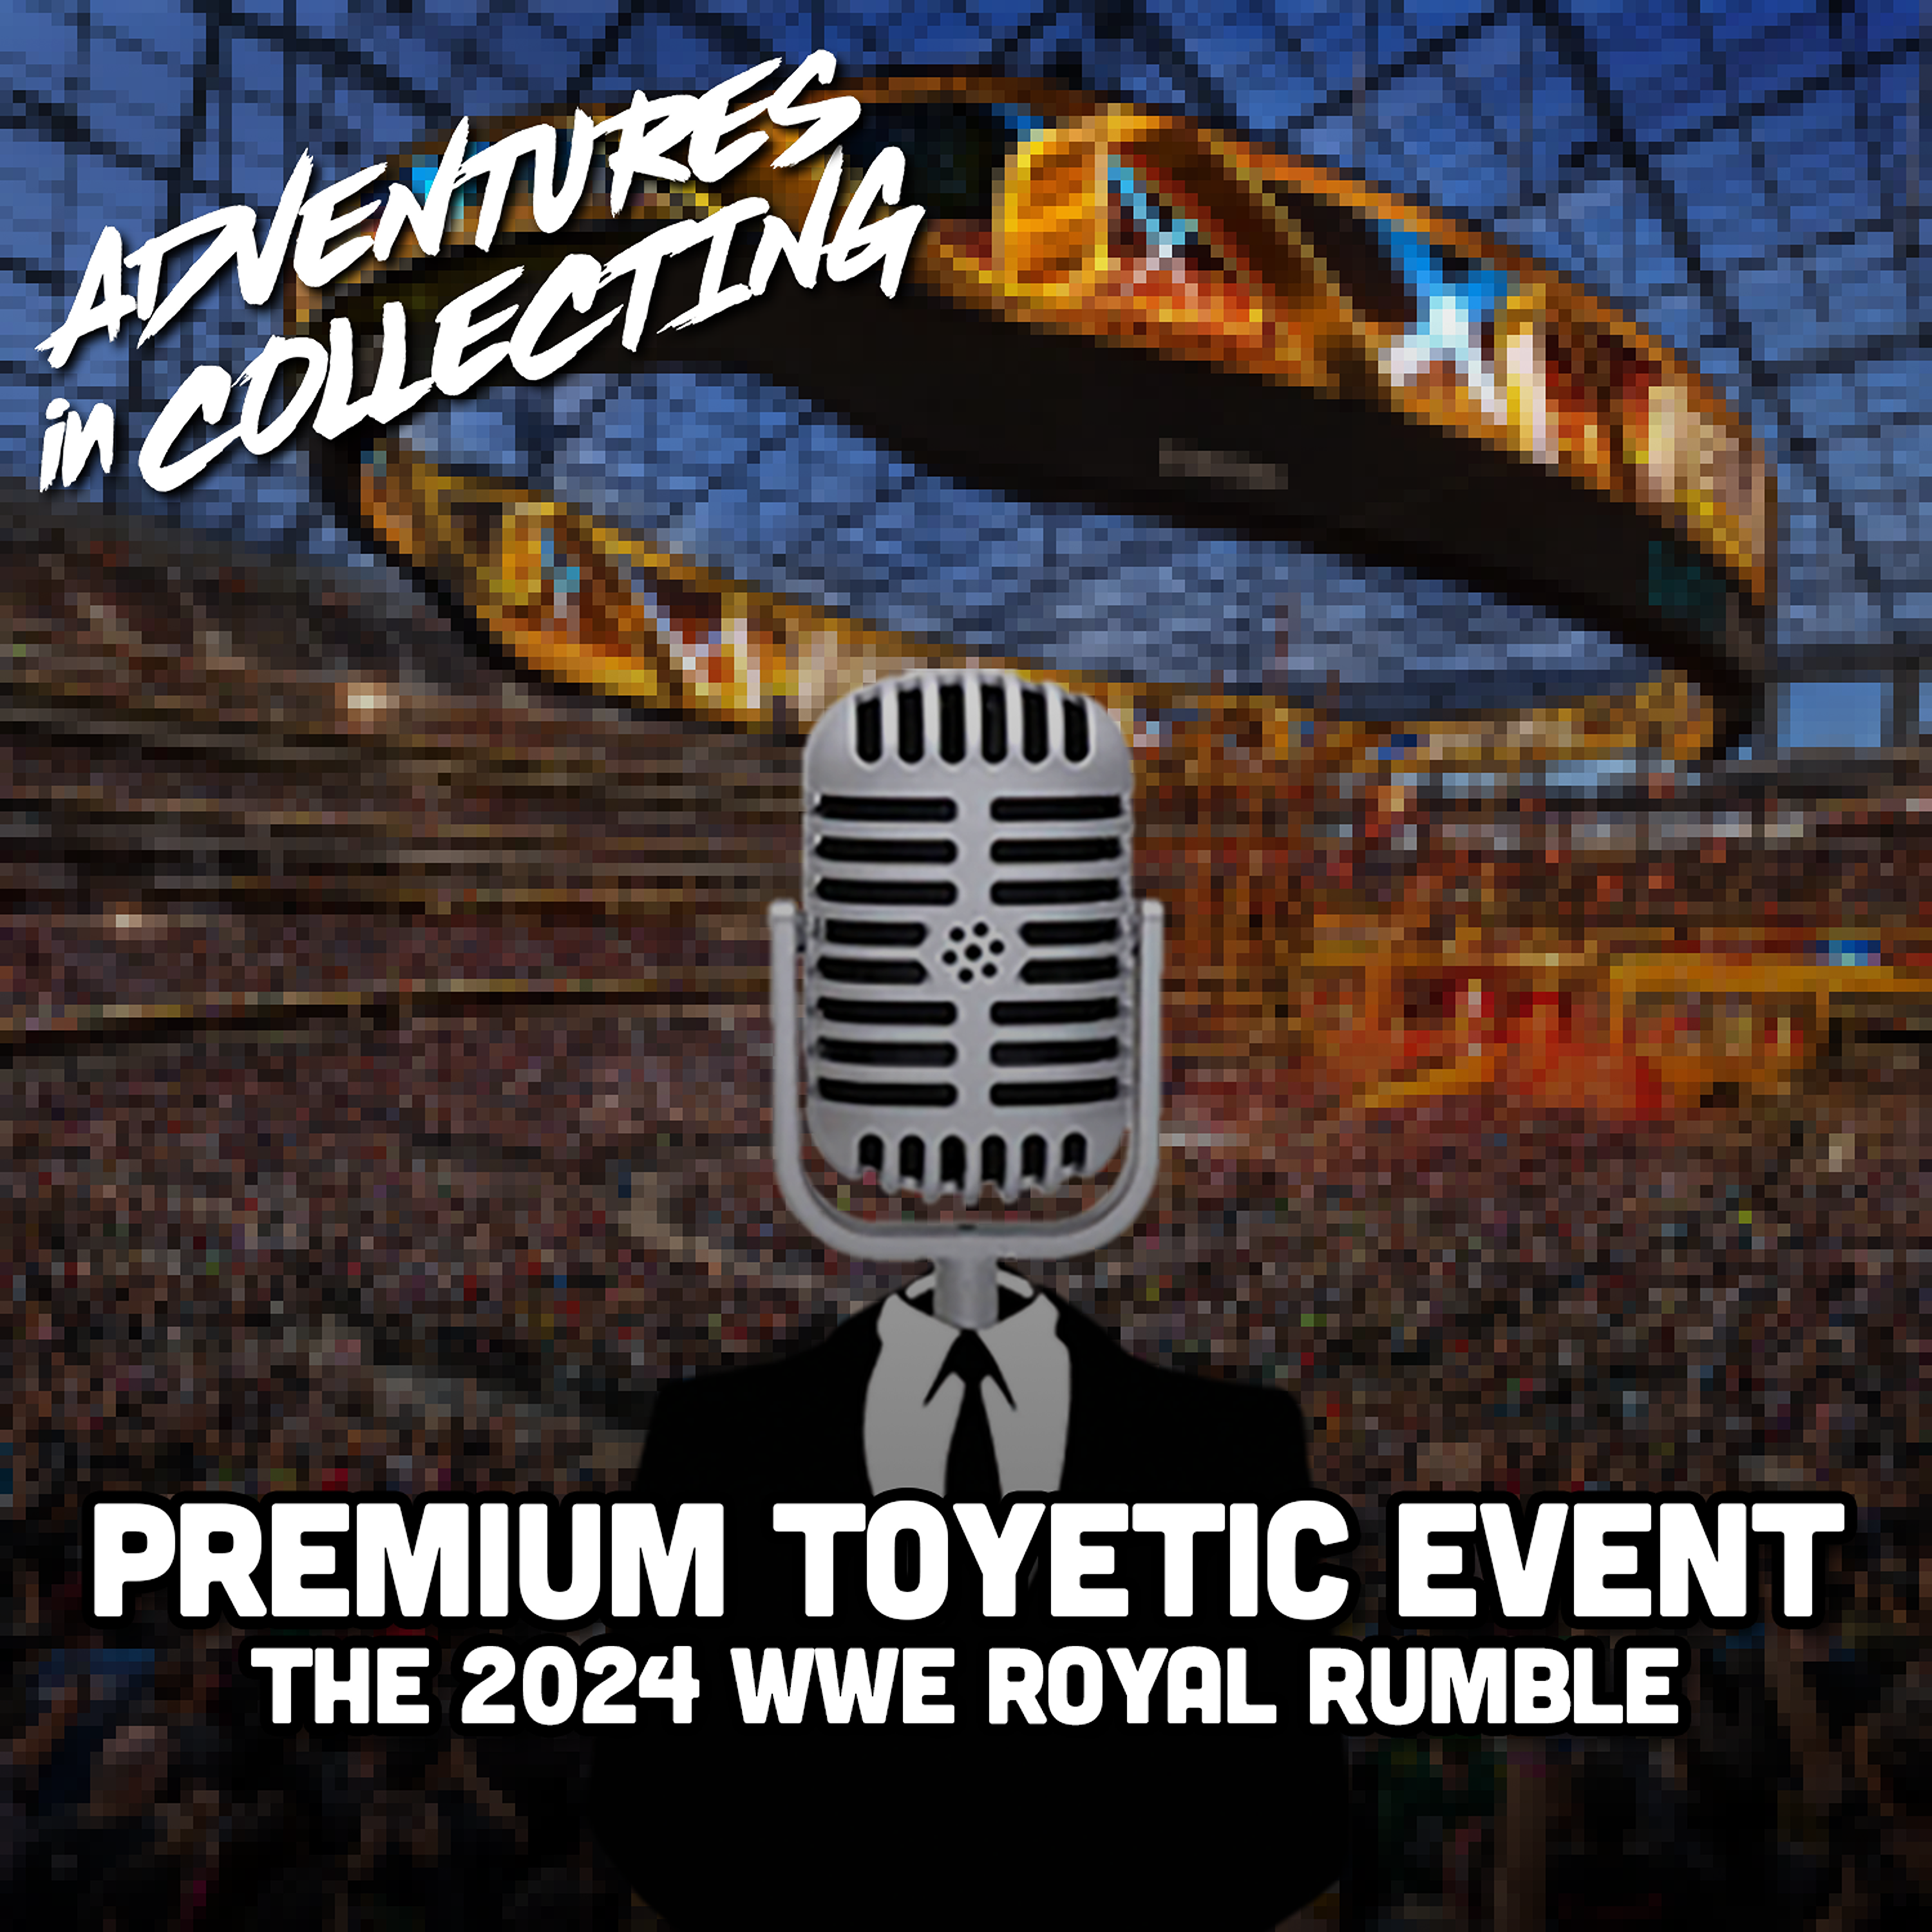 Premium Toyetic Event - The 2024 Royal Rumble